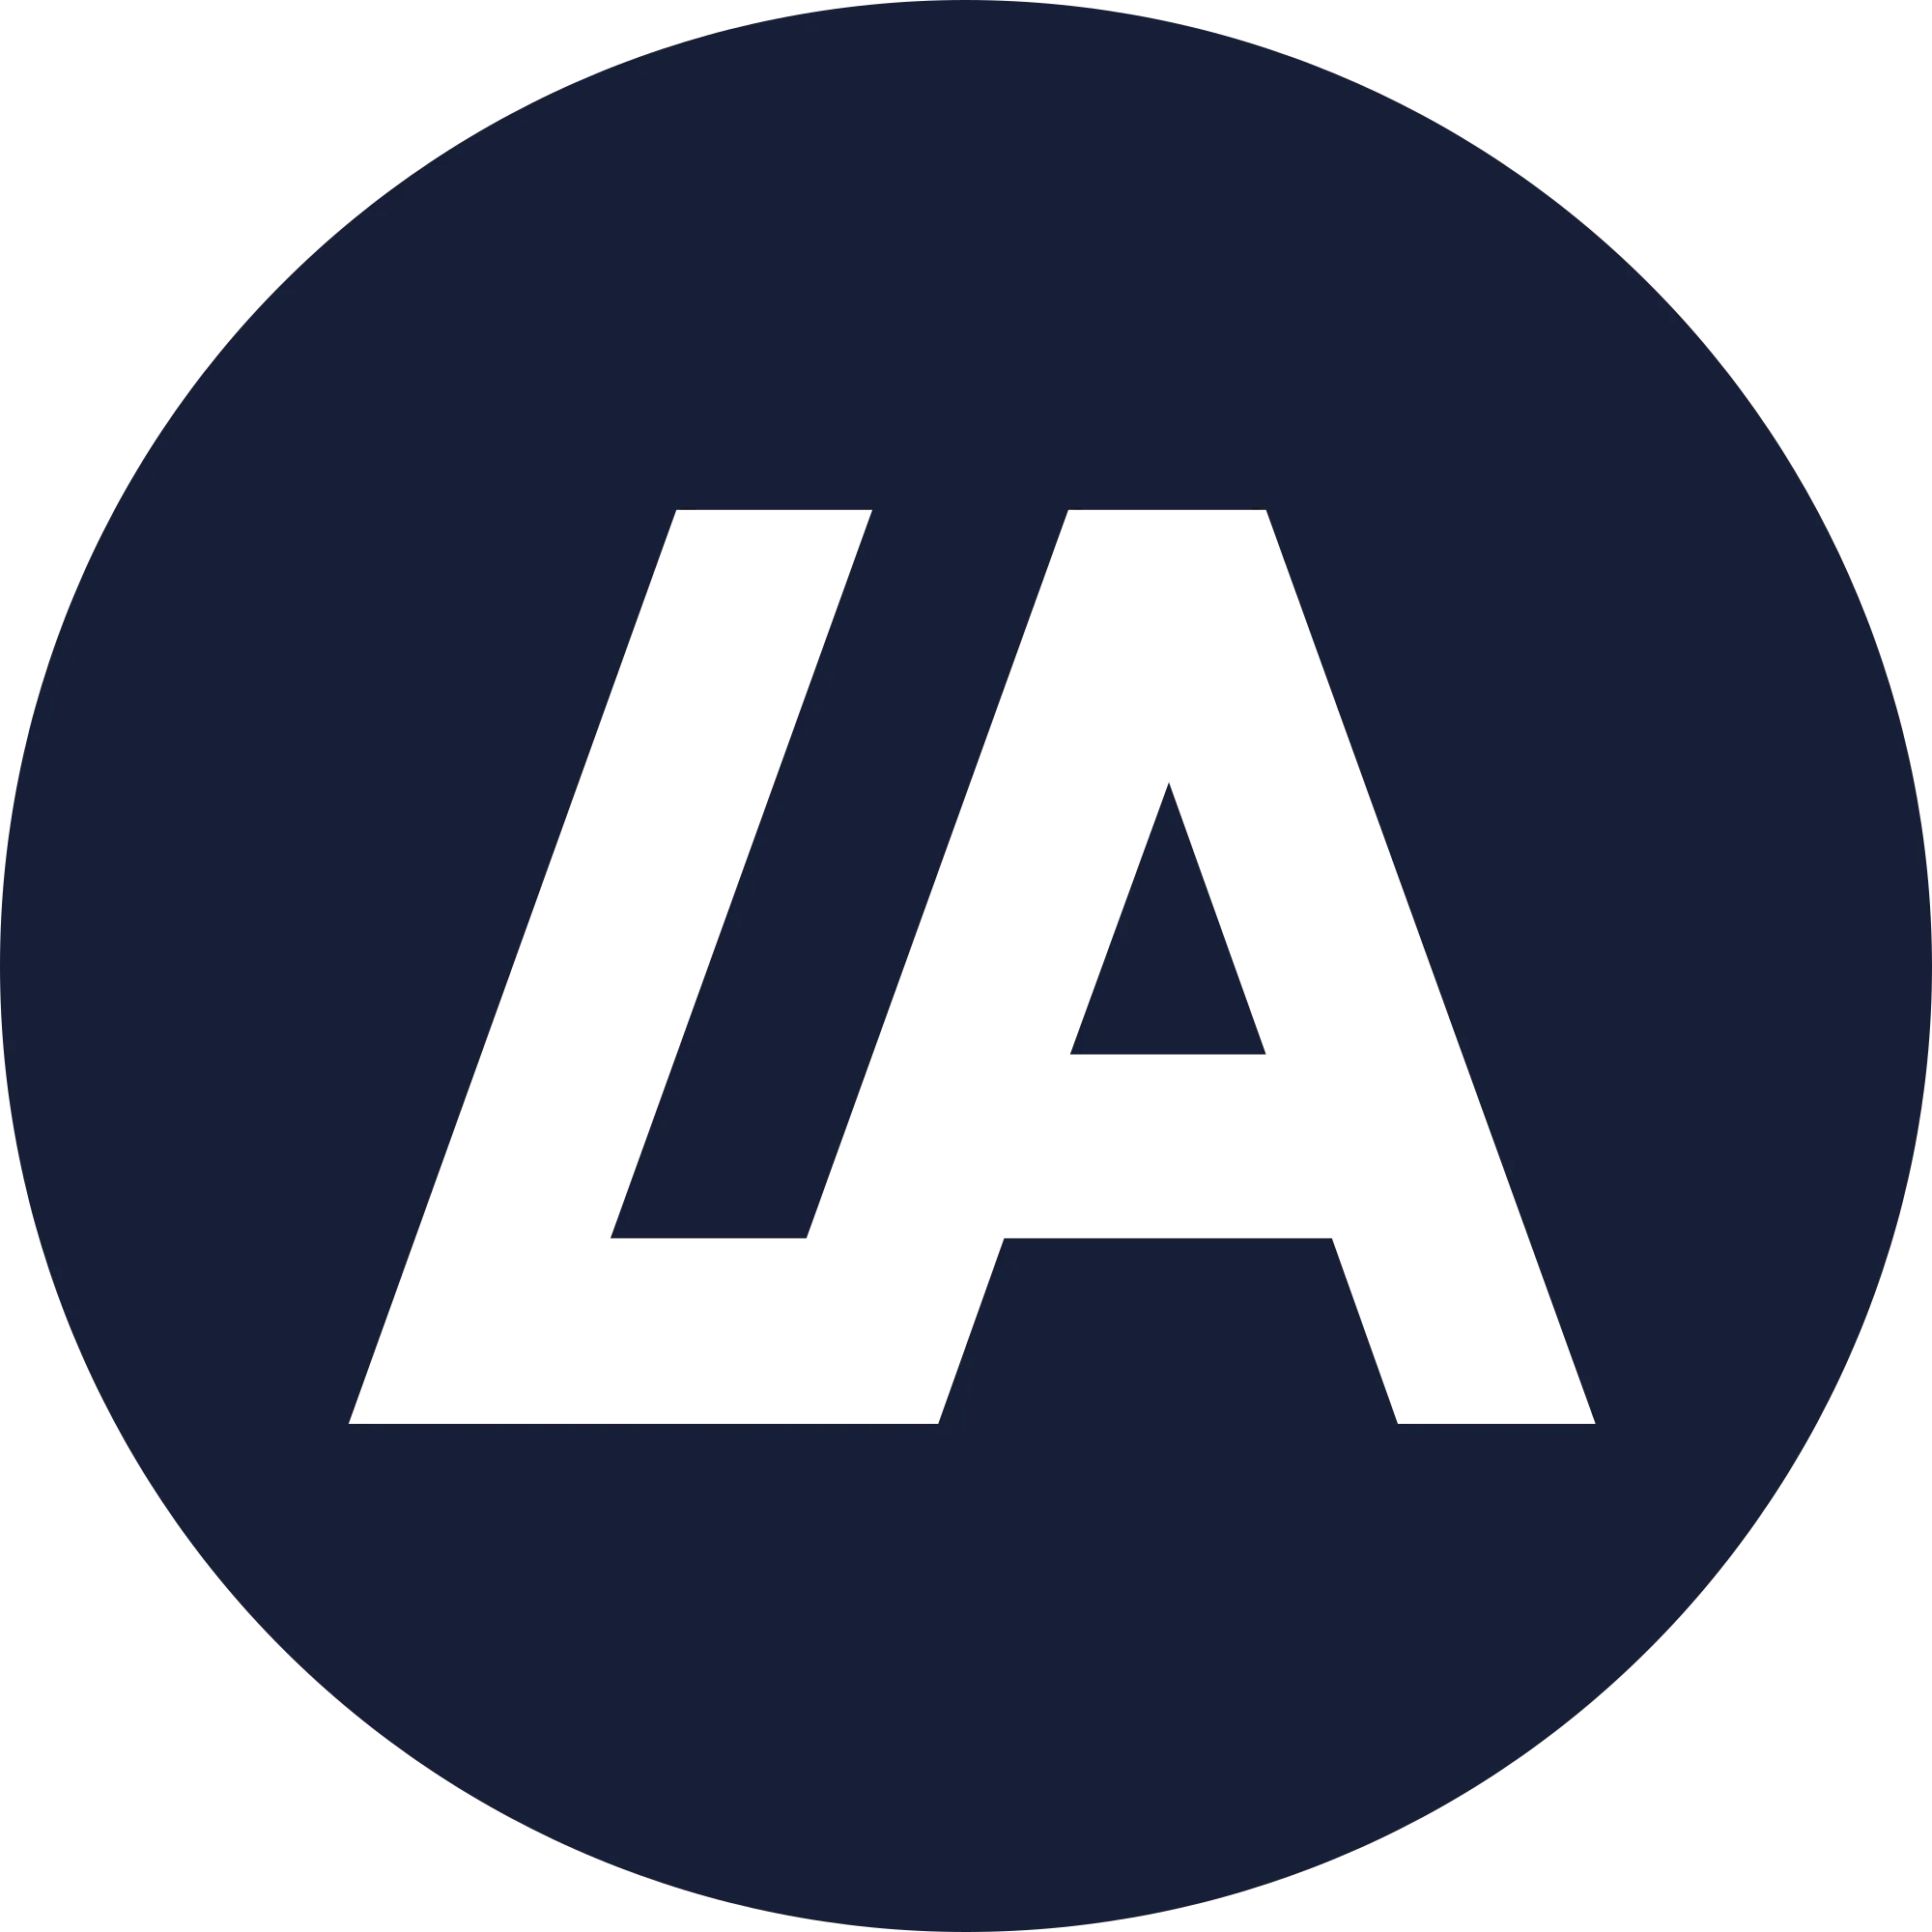 LATOKEN logo in png format